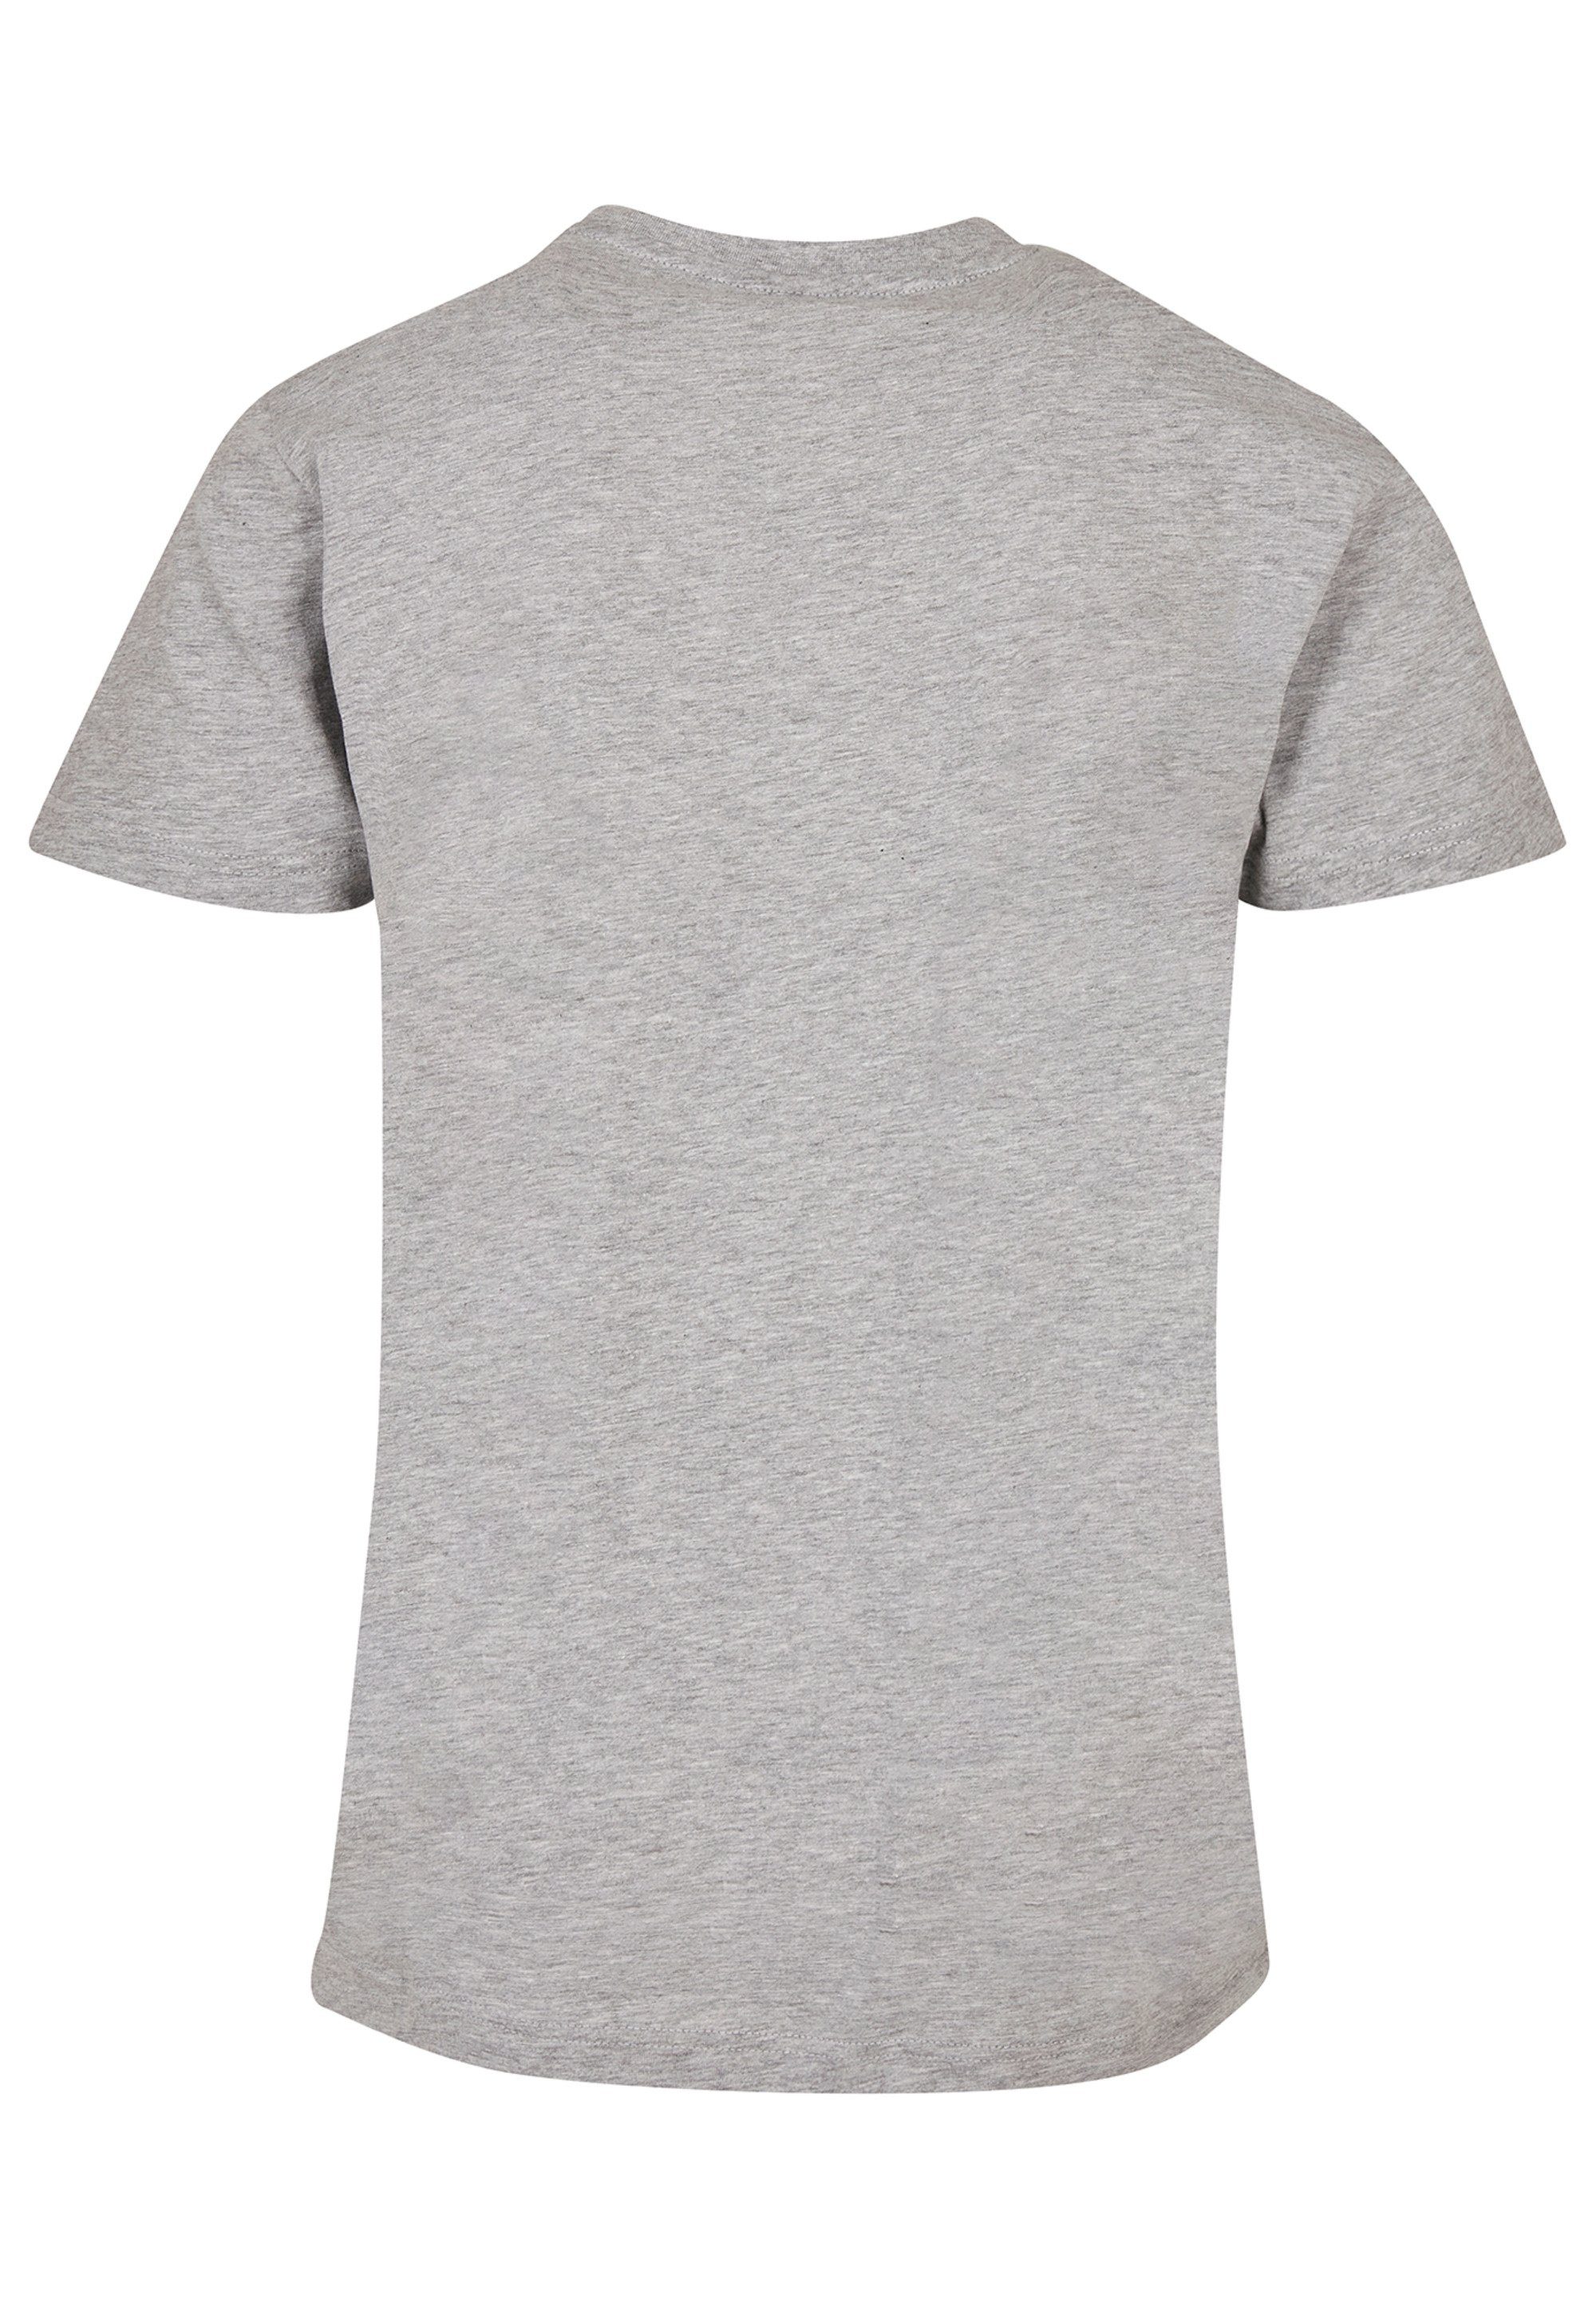 F4NT4STIC T-Shirt Niederlande Holland Flagge Print distressed heather grey